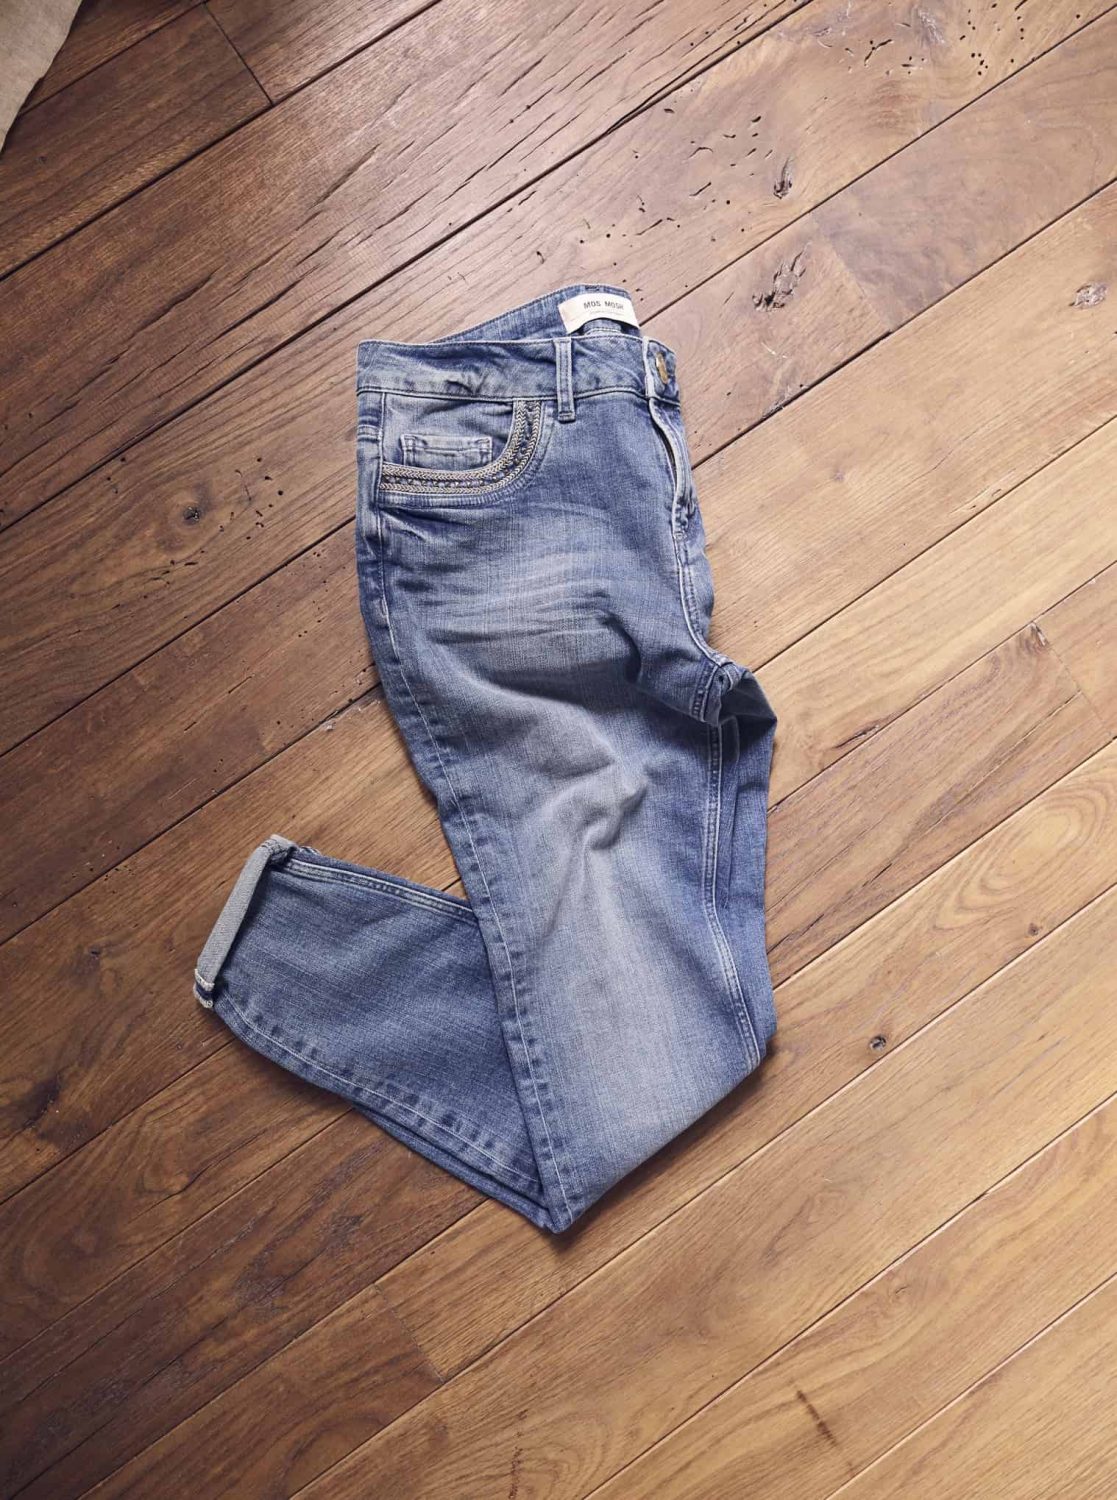 Bradford Dust Jeans (2)